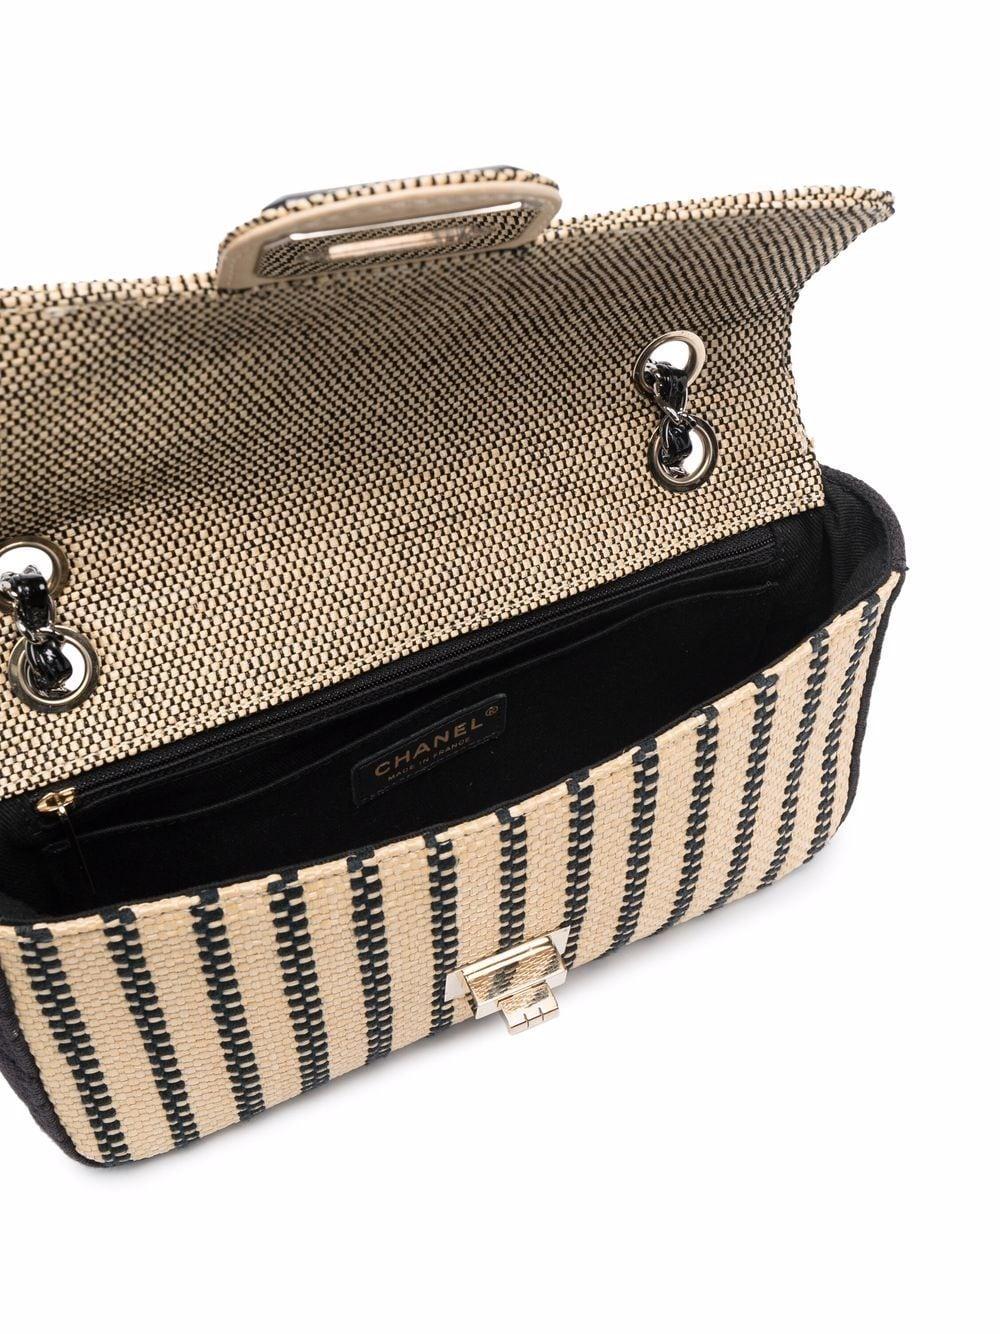 Chanel 2012 Classic Flap Limited Edition Beige & Black Raffia Straw Canvas Bag For Sale 4